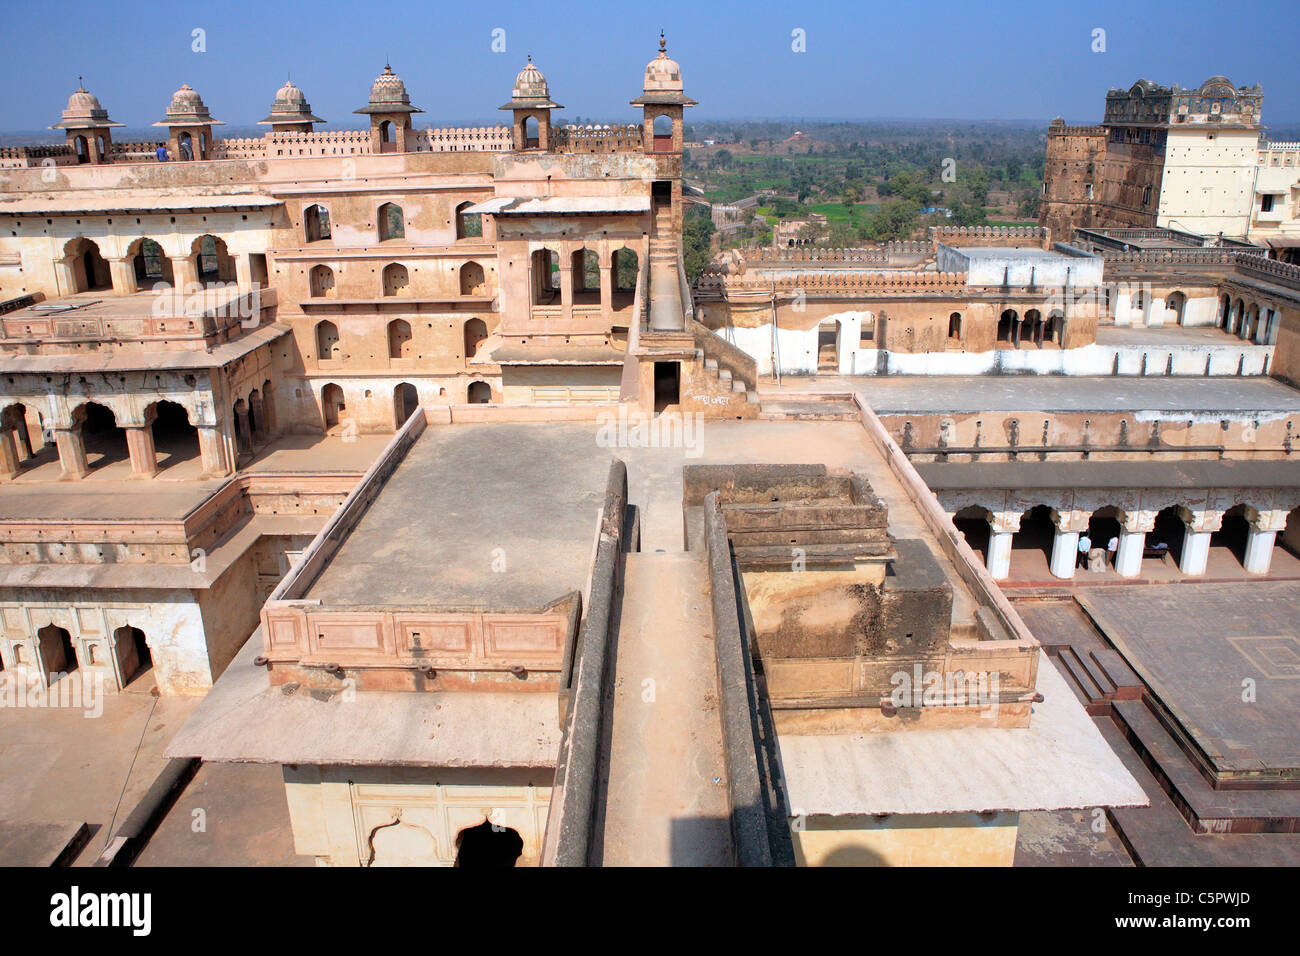 Ram Raja palace (late 16th century), Orchha, Madhya Pradesh state, India Stock Photo